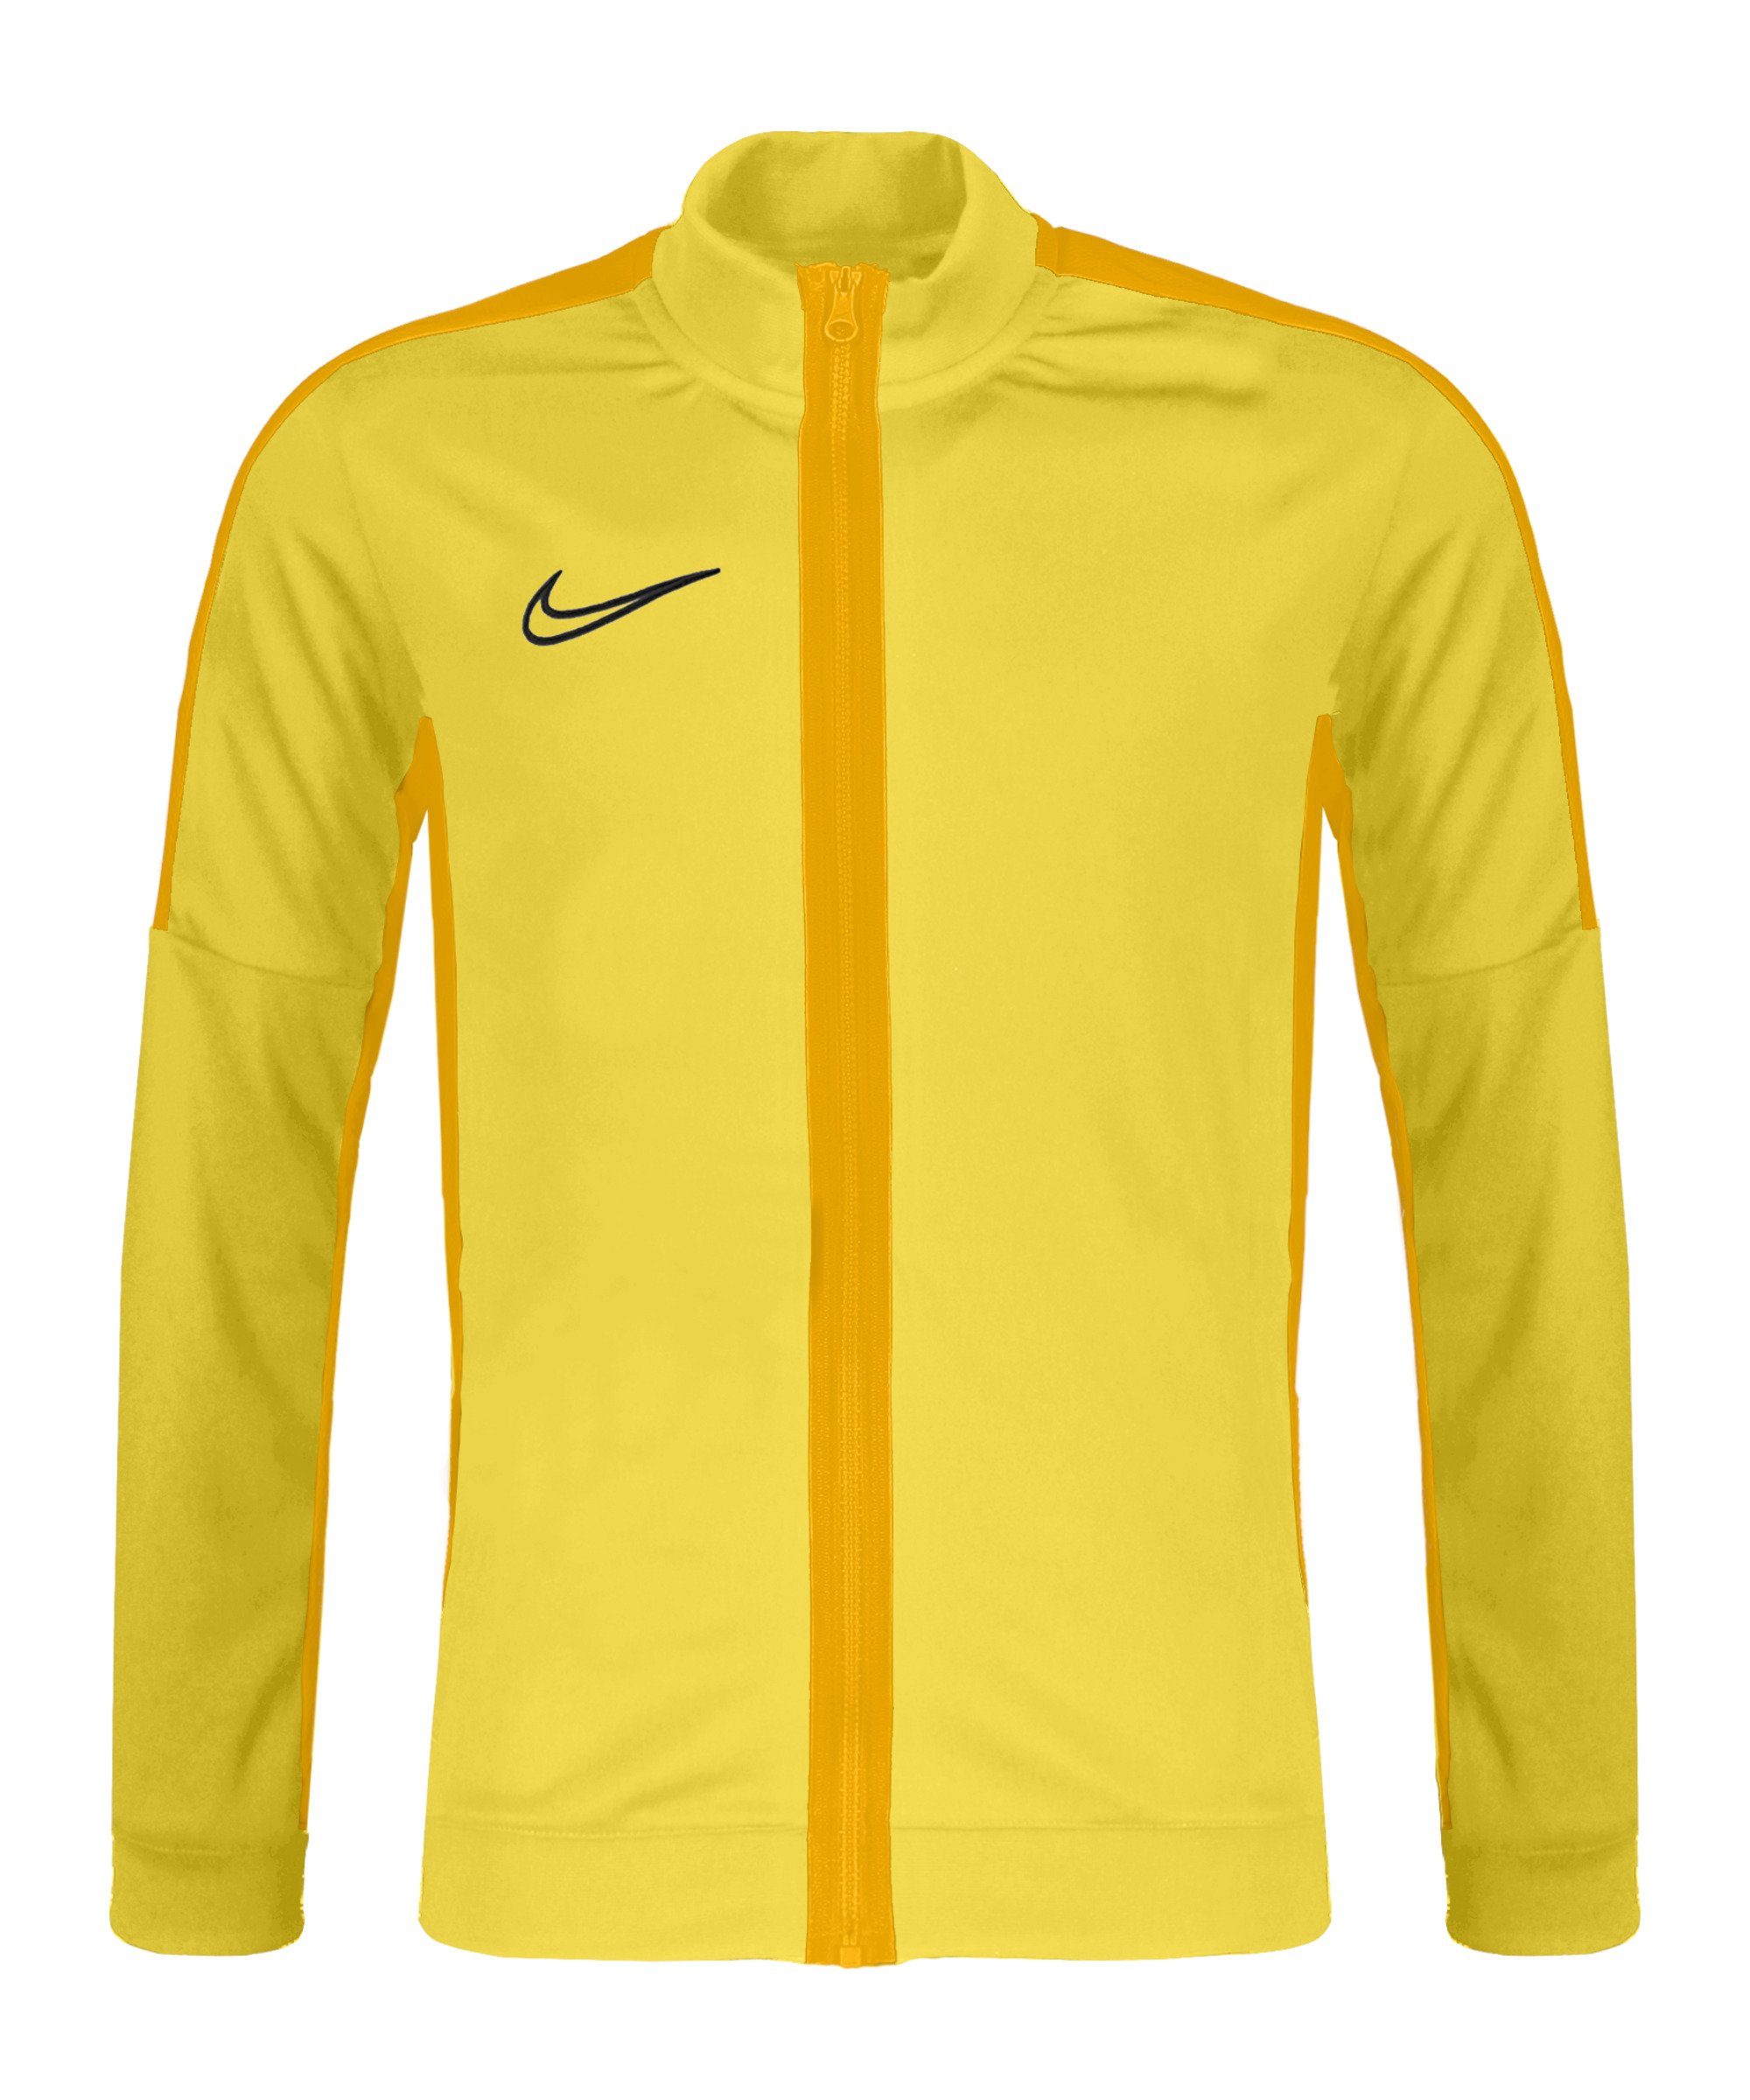 Academy gelbgoldschwarz Trainingsjacke Nike 23 Sweatjacke